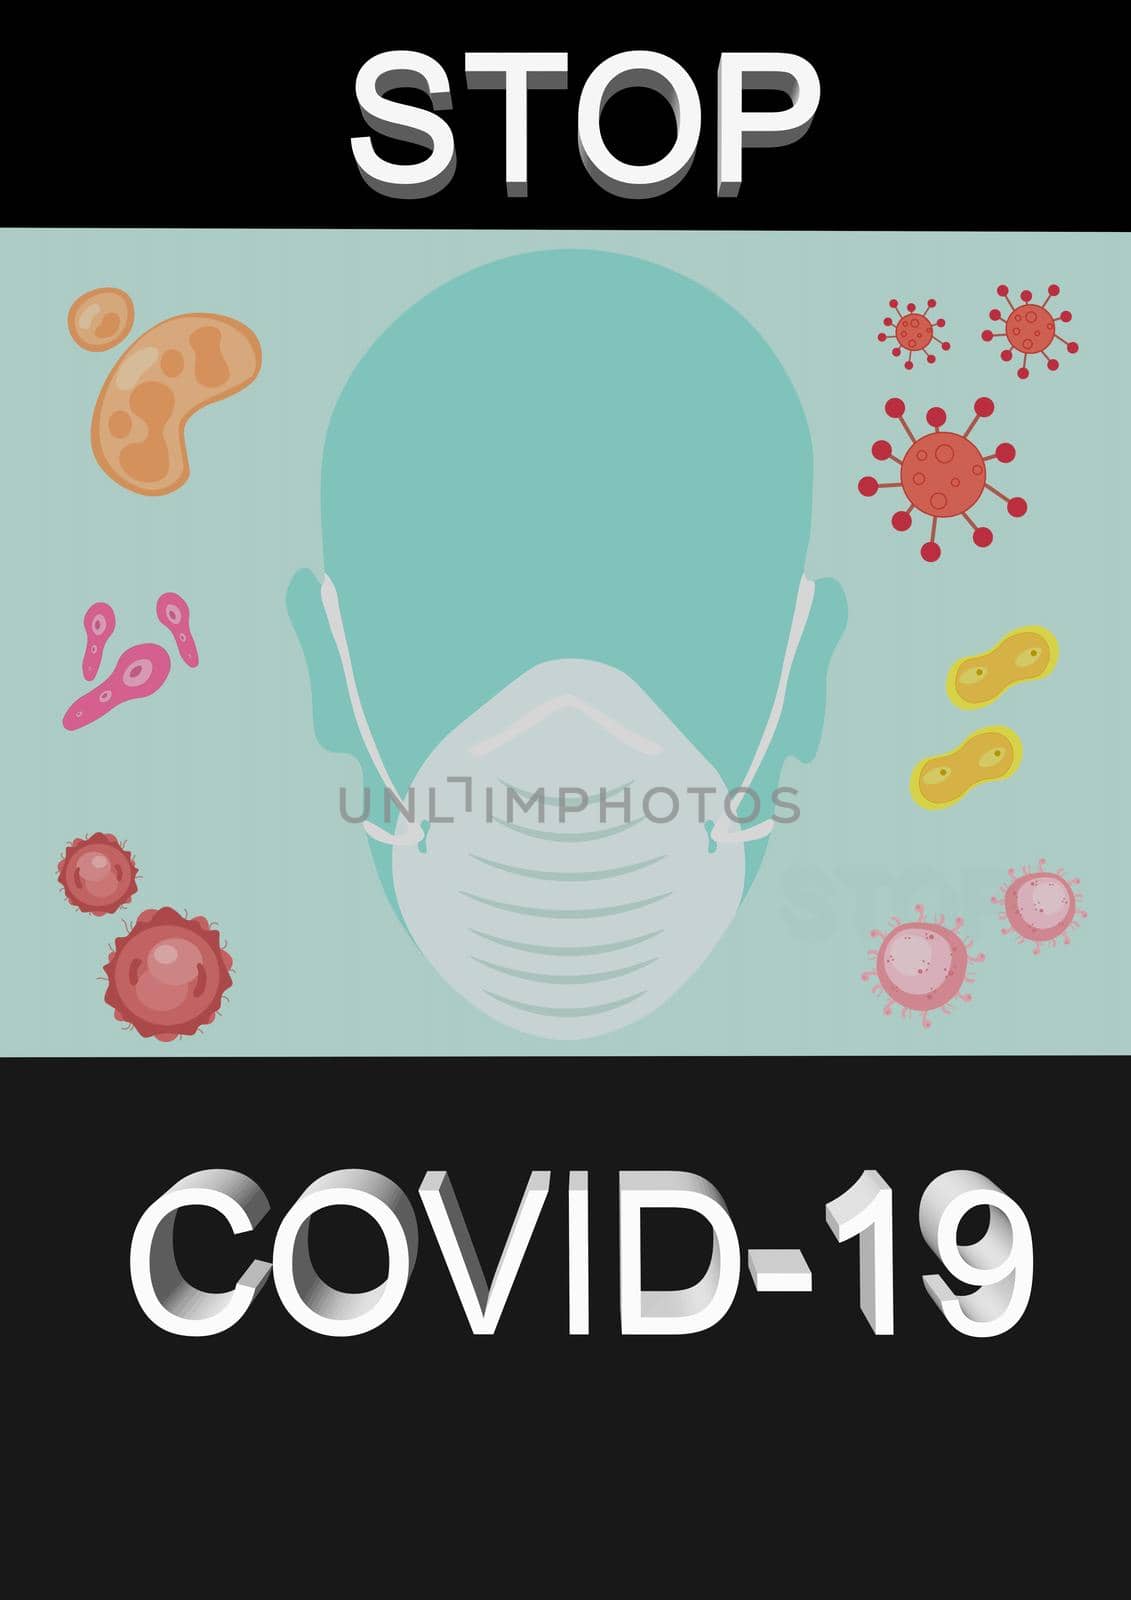 stop coronavirus and sky - 3d rendering by mariephotos